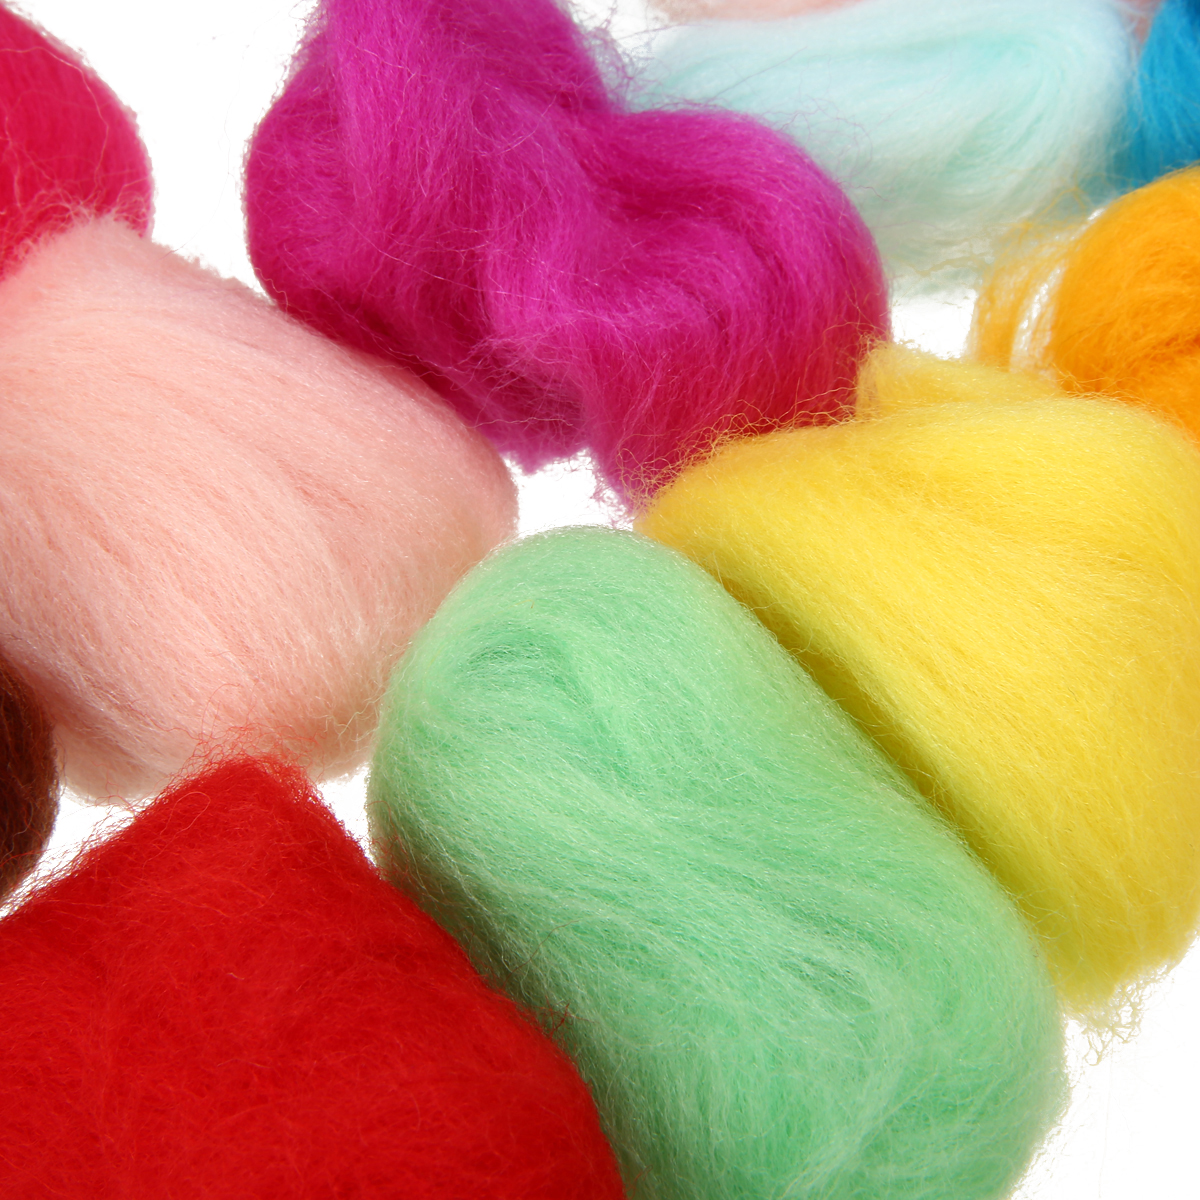 New 36 Colors 3g Non-repetitive Felting Wool Fiber Wool Felt Starter DIY Kit For Needle Dry Felting Sewing